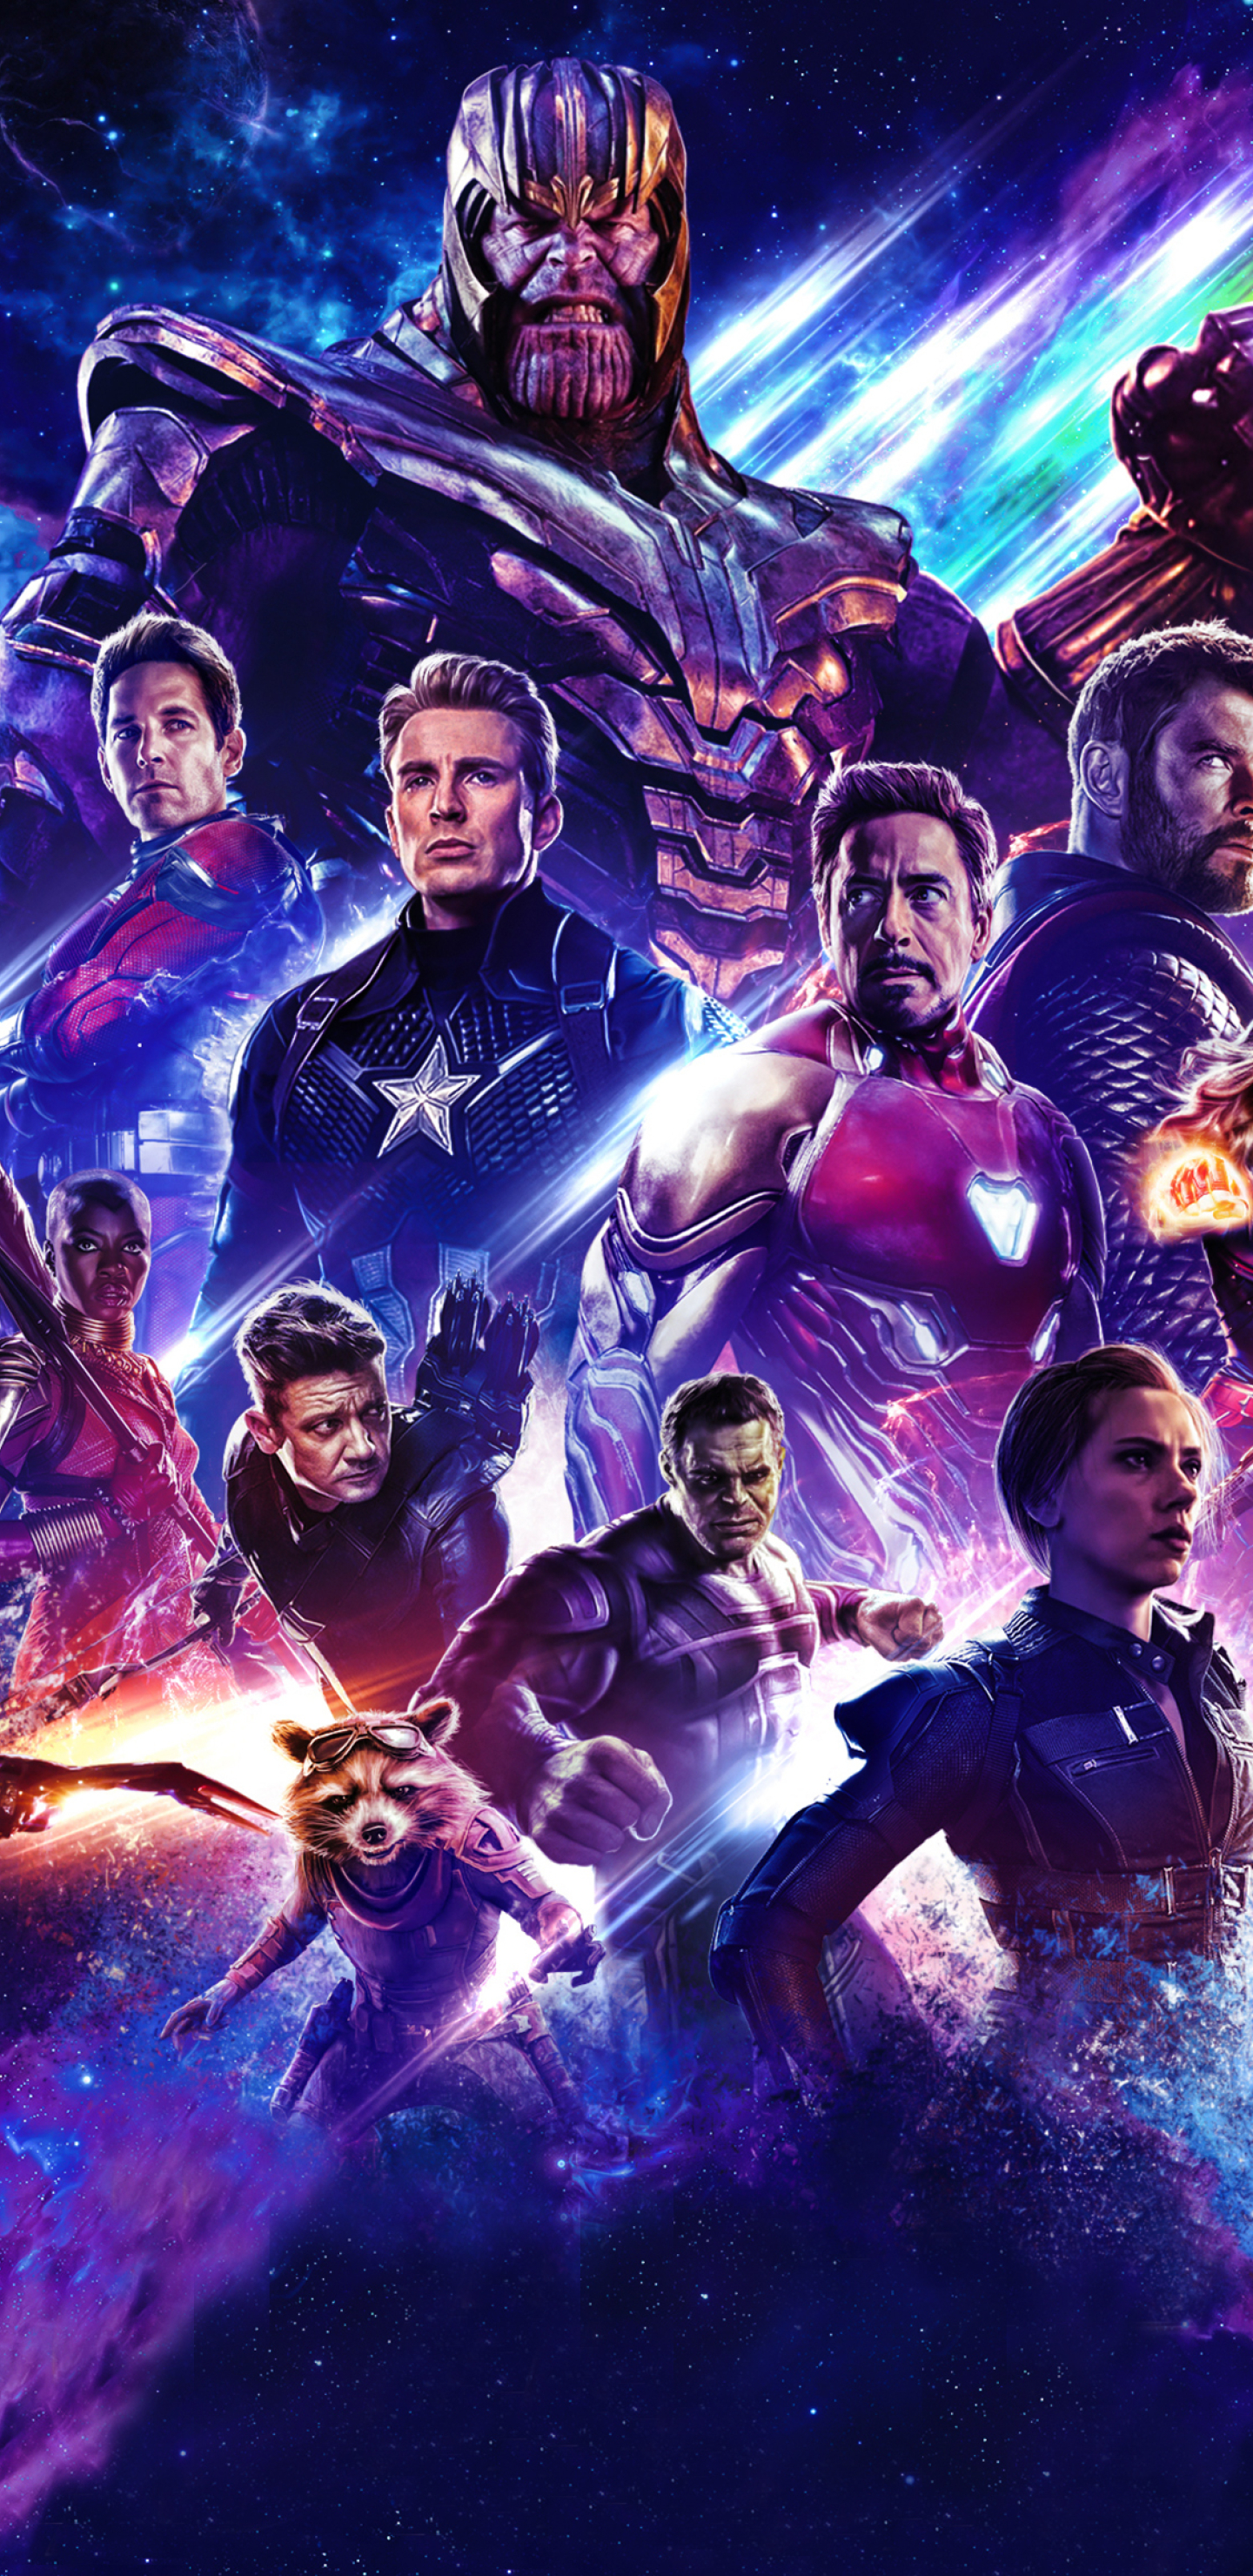 25+ Avengers Endgame Wallpaper Hd Download For Pc - Bizt ...